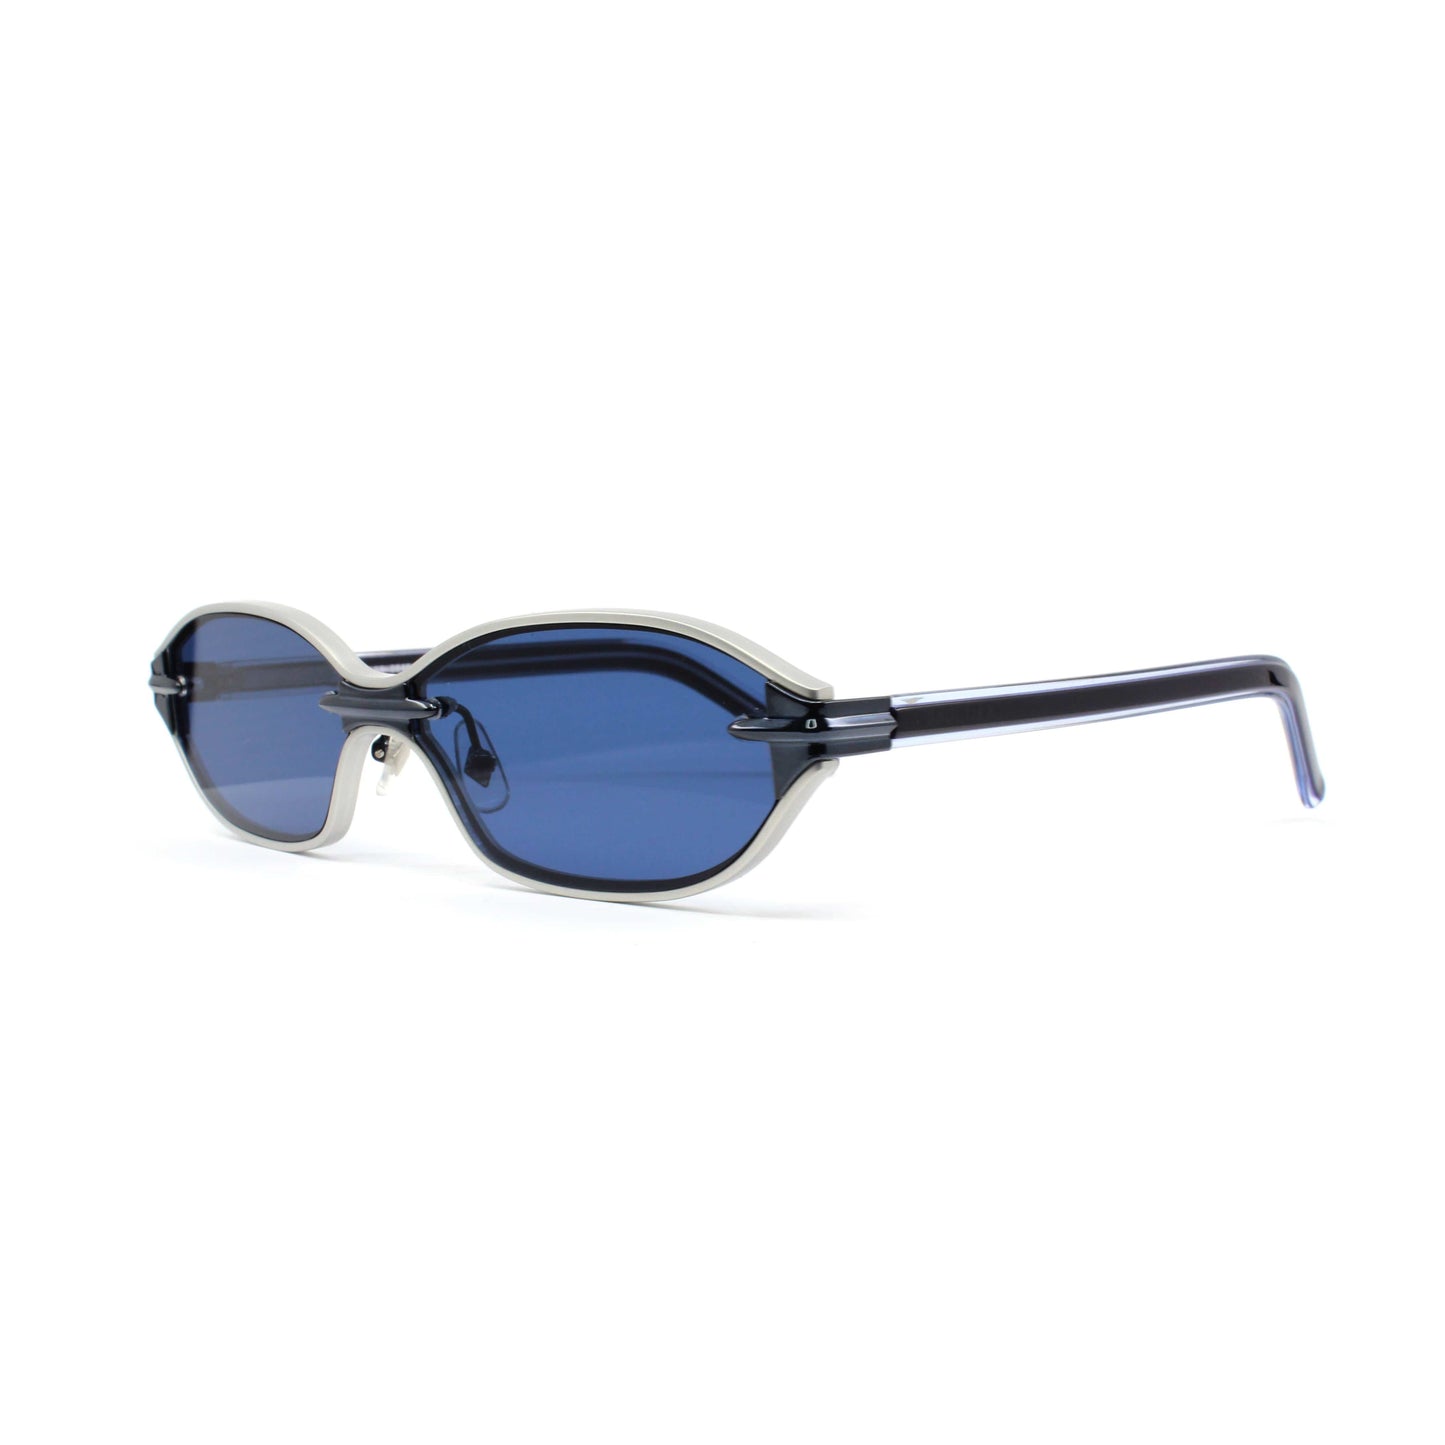 Silver Vintage Jean Paul Gaultier 56-0040 Sunglasses RSTKD Vintage